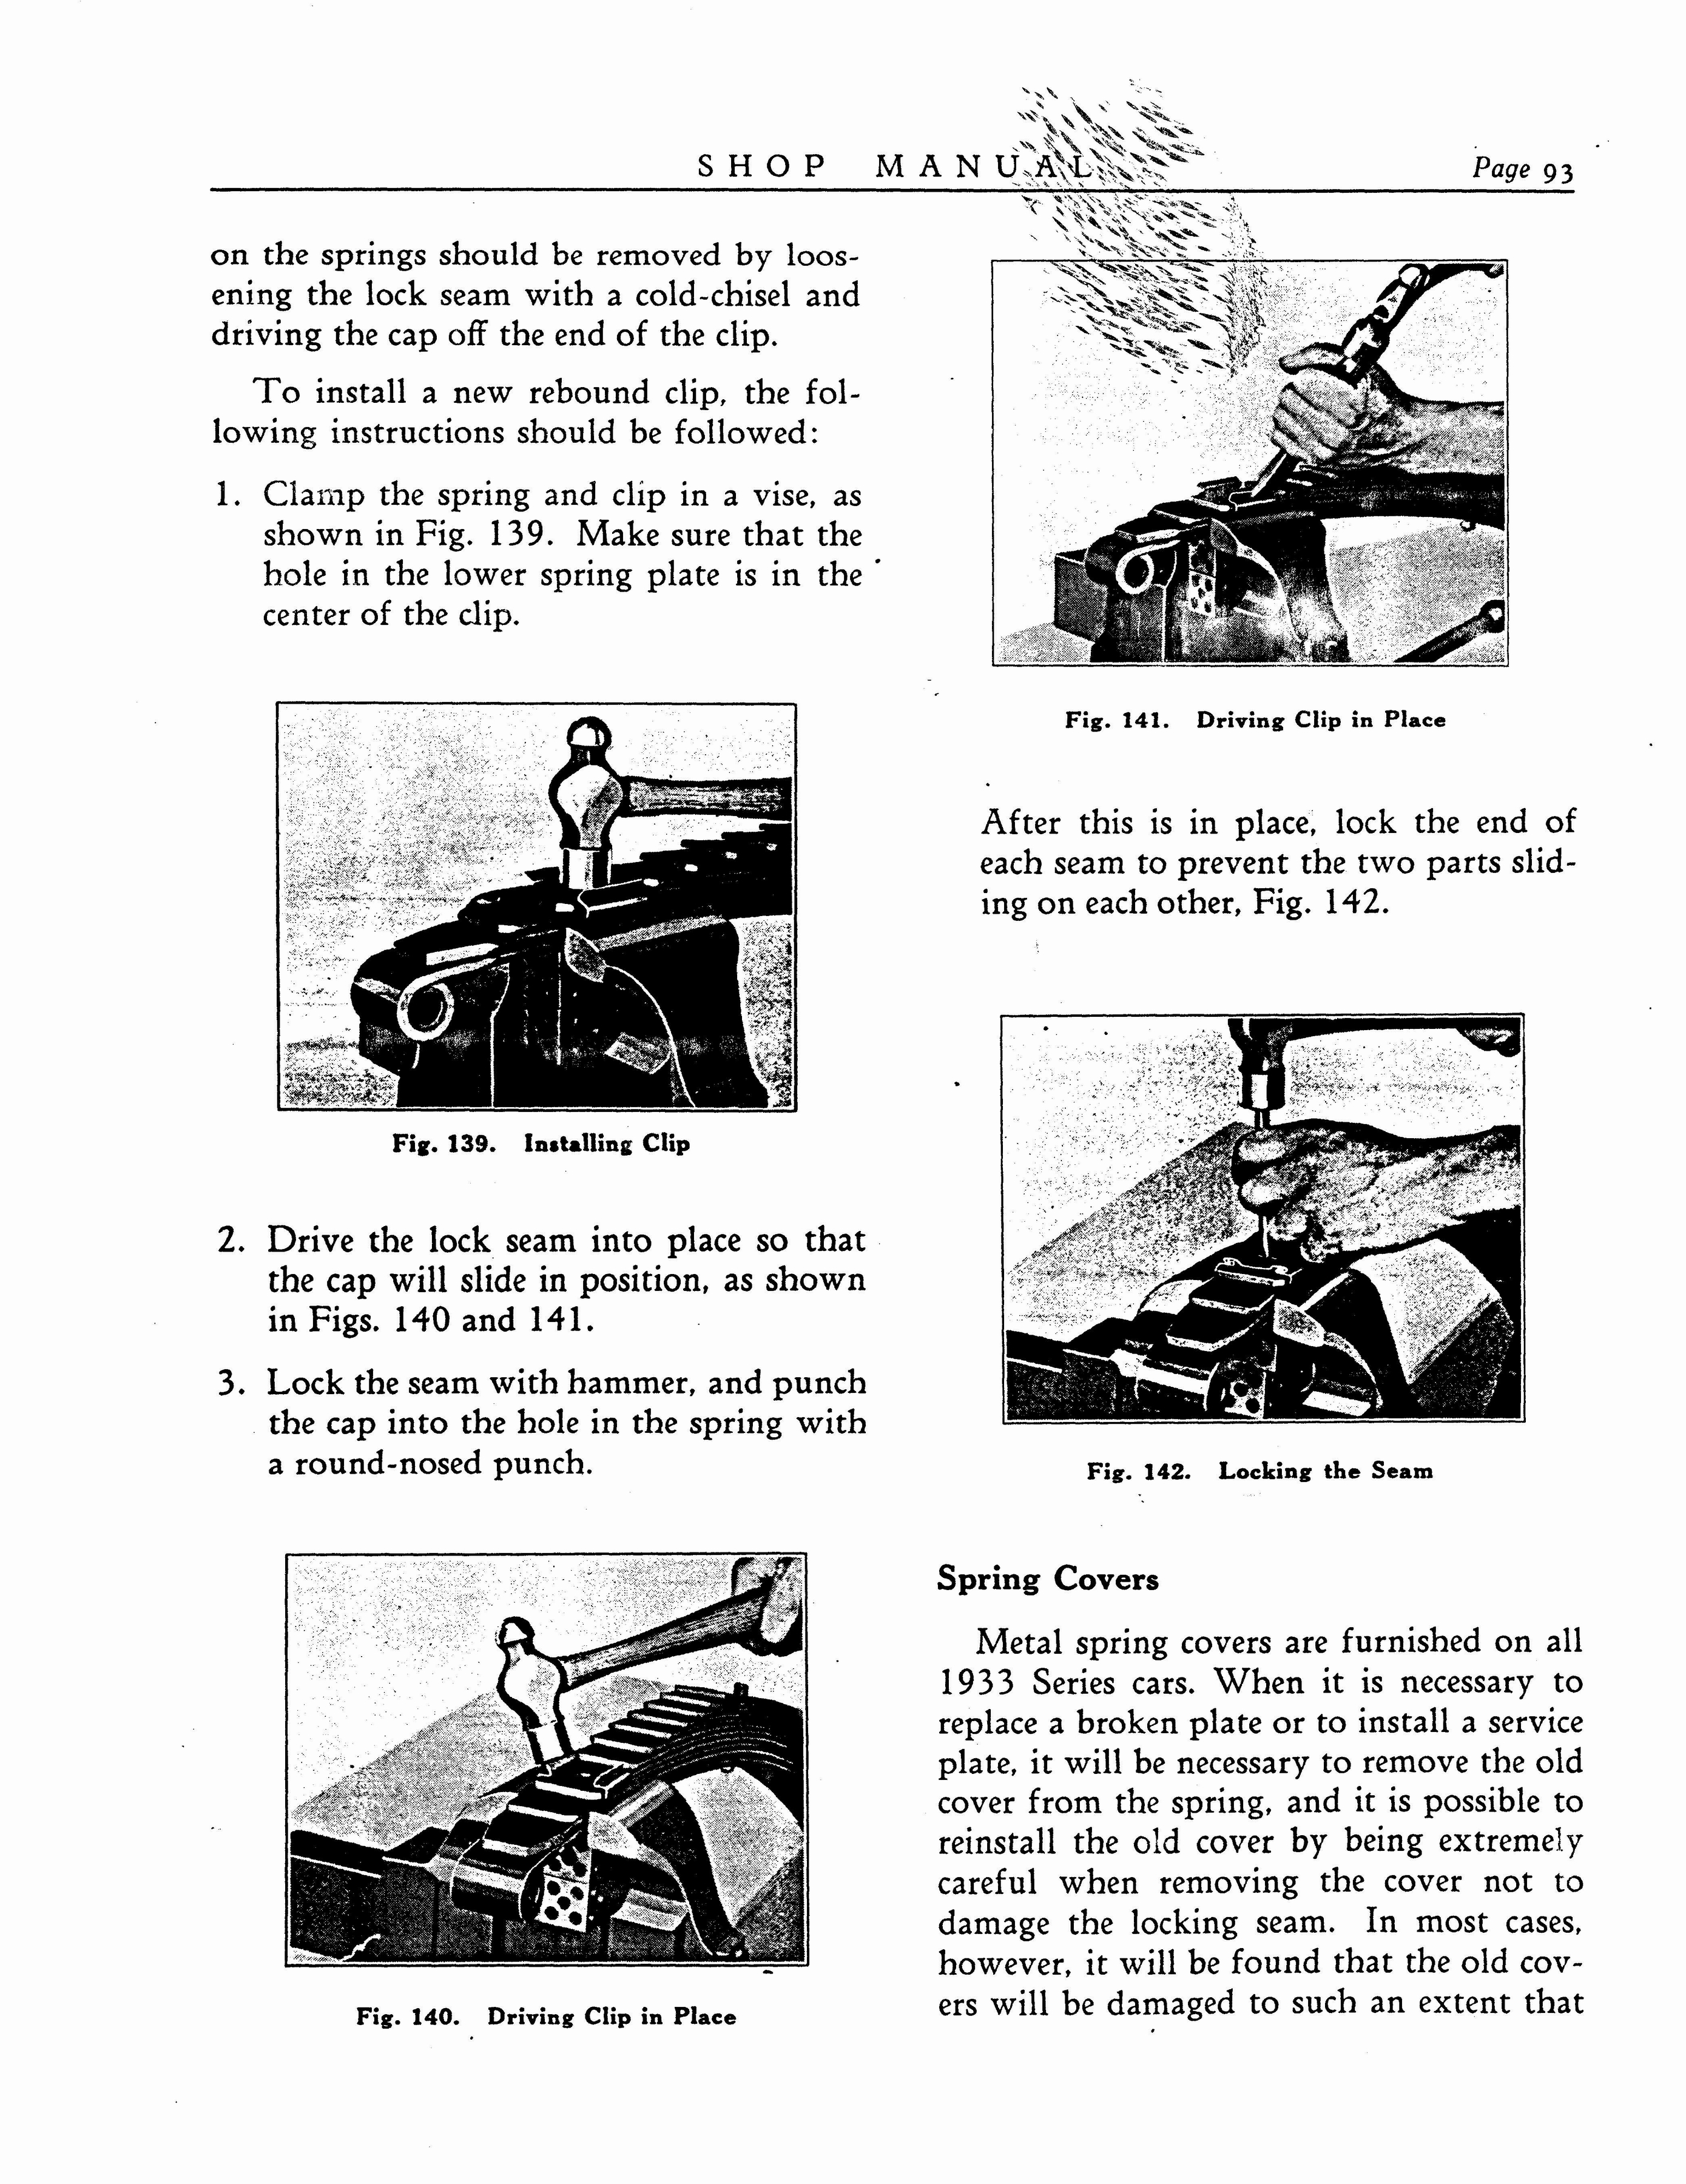 n_1933 Buick Shop Manual_Page_094.jpg